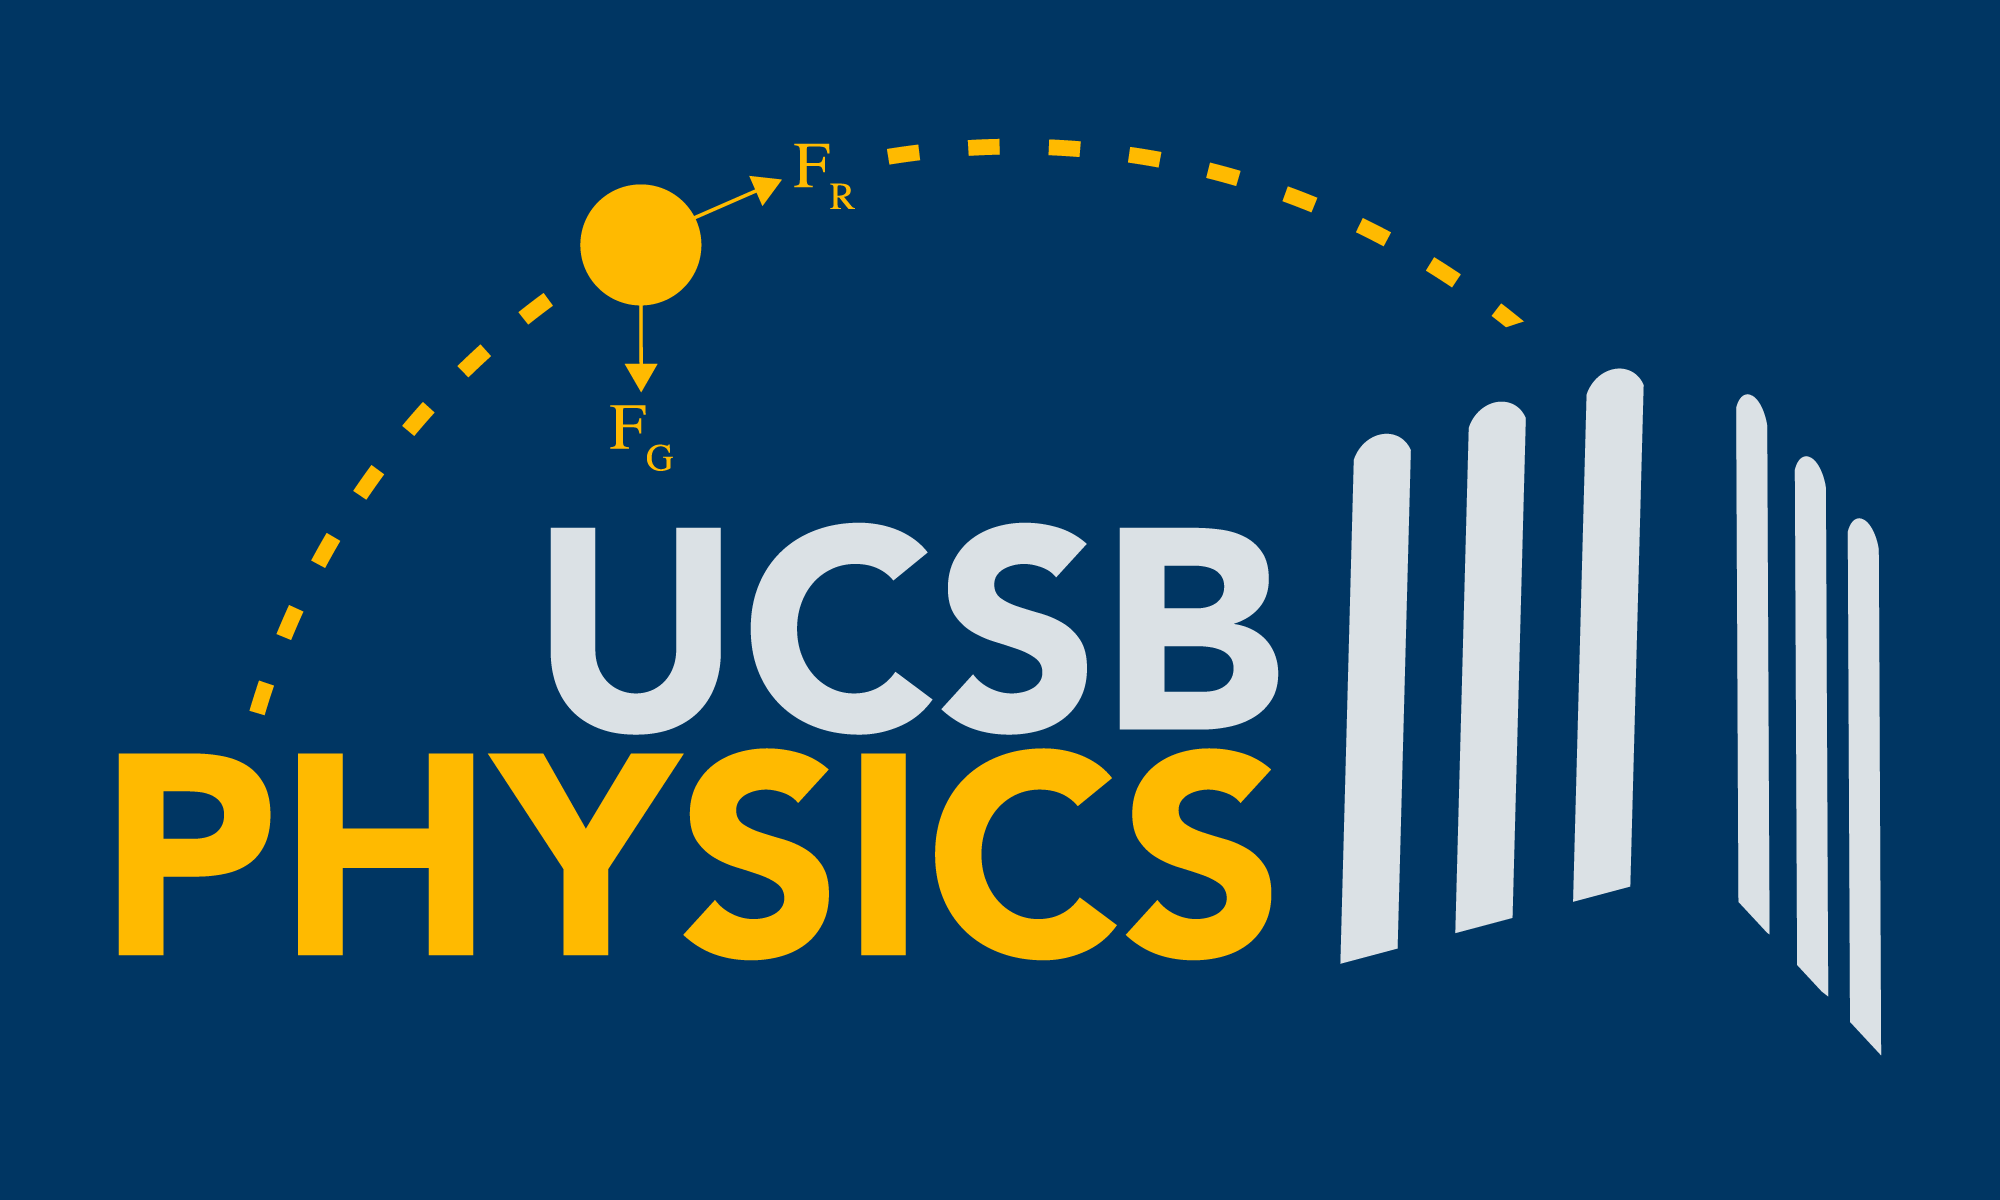 UCSB Physics logo with free body diagram